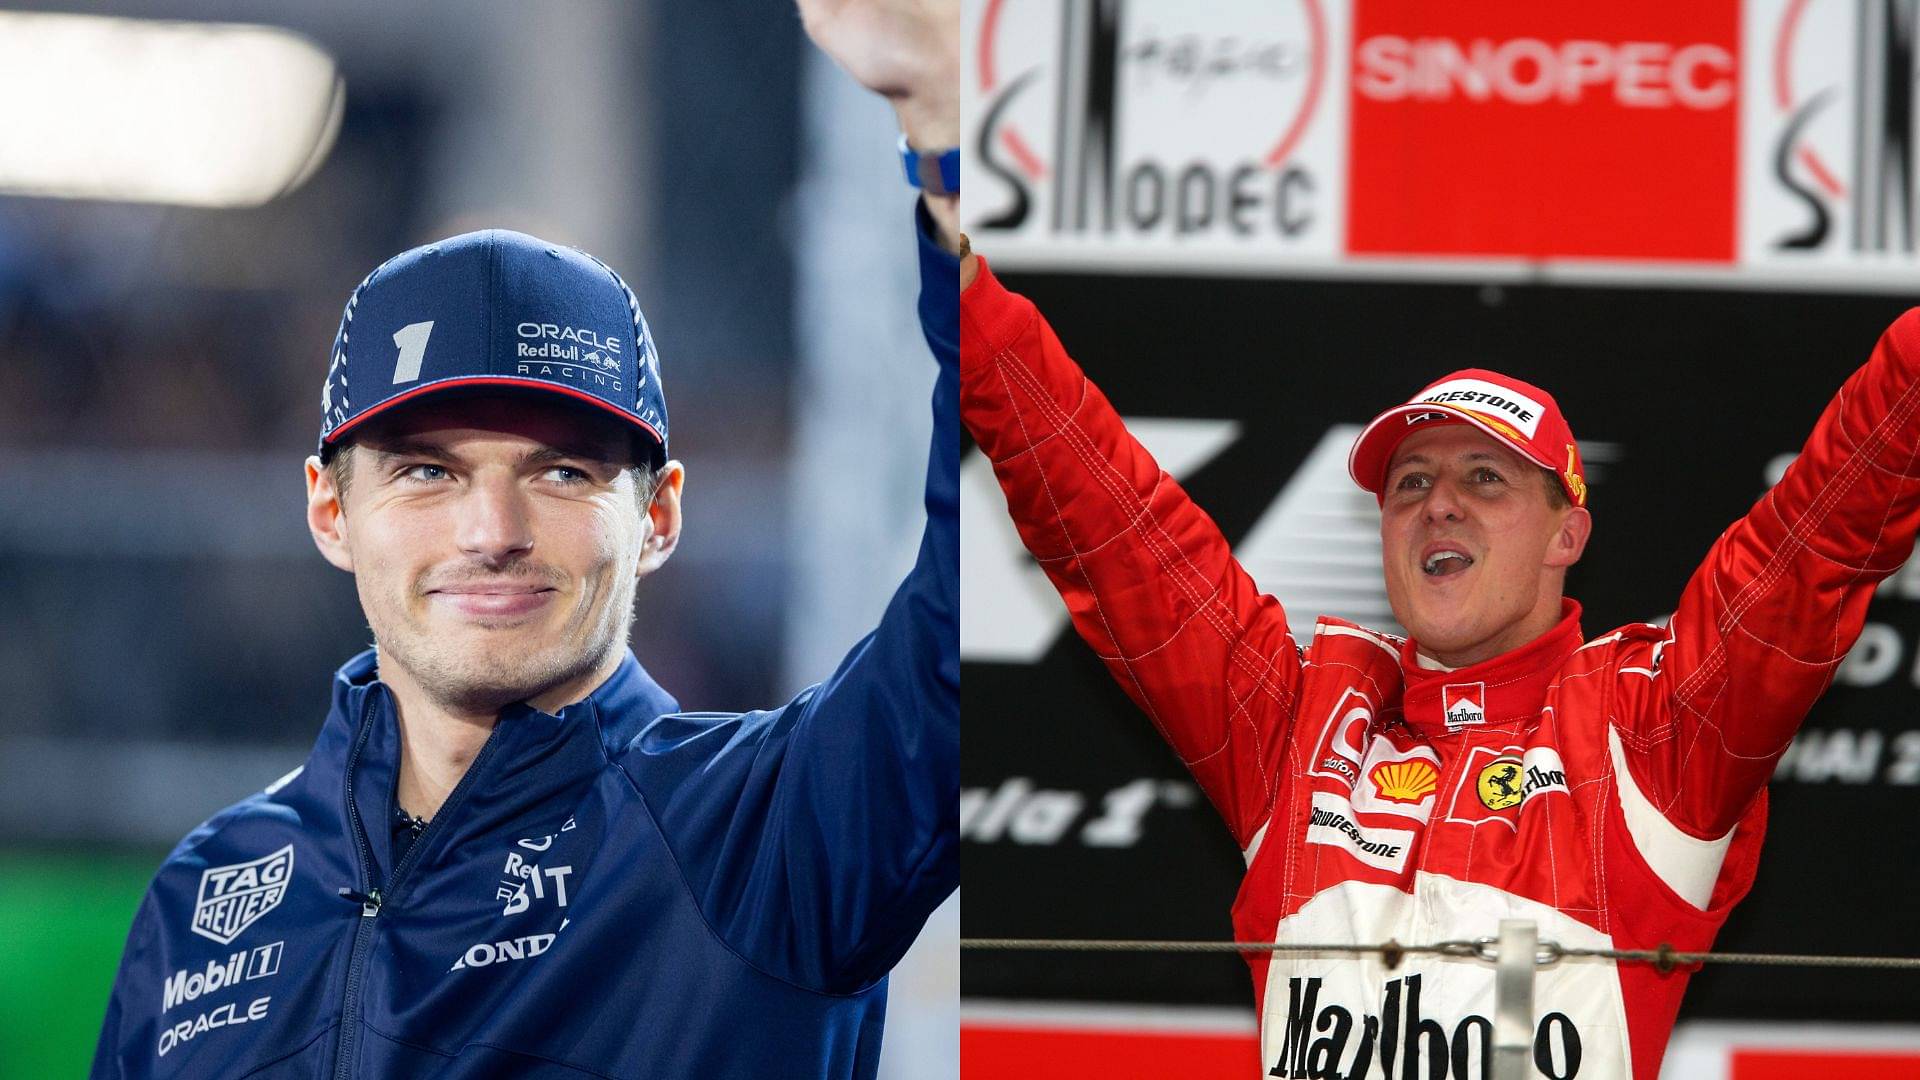 Max Verstappen’s Uncanny Resemblance to Michael Schumacher Makes Him Unbeatable, Says F1 Expert